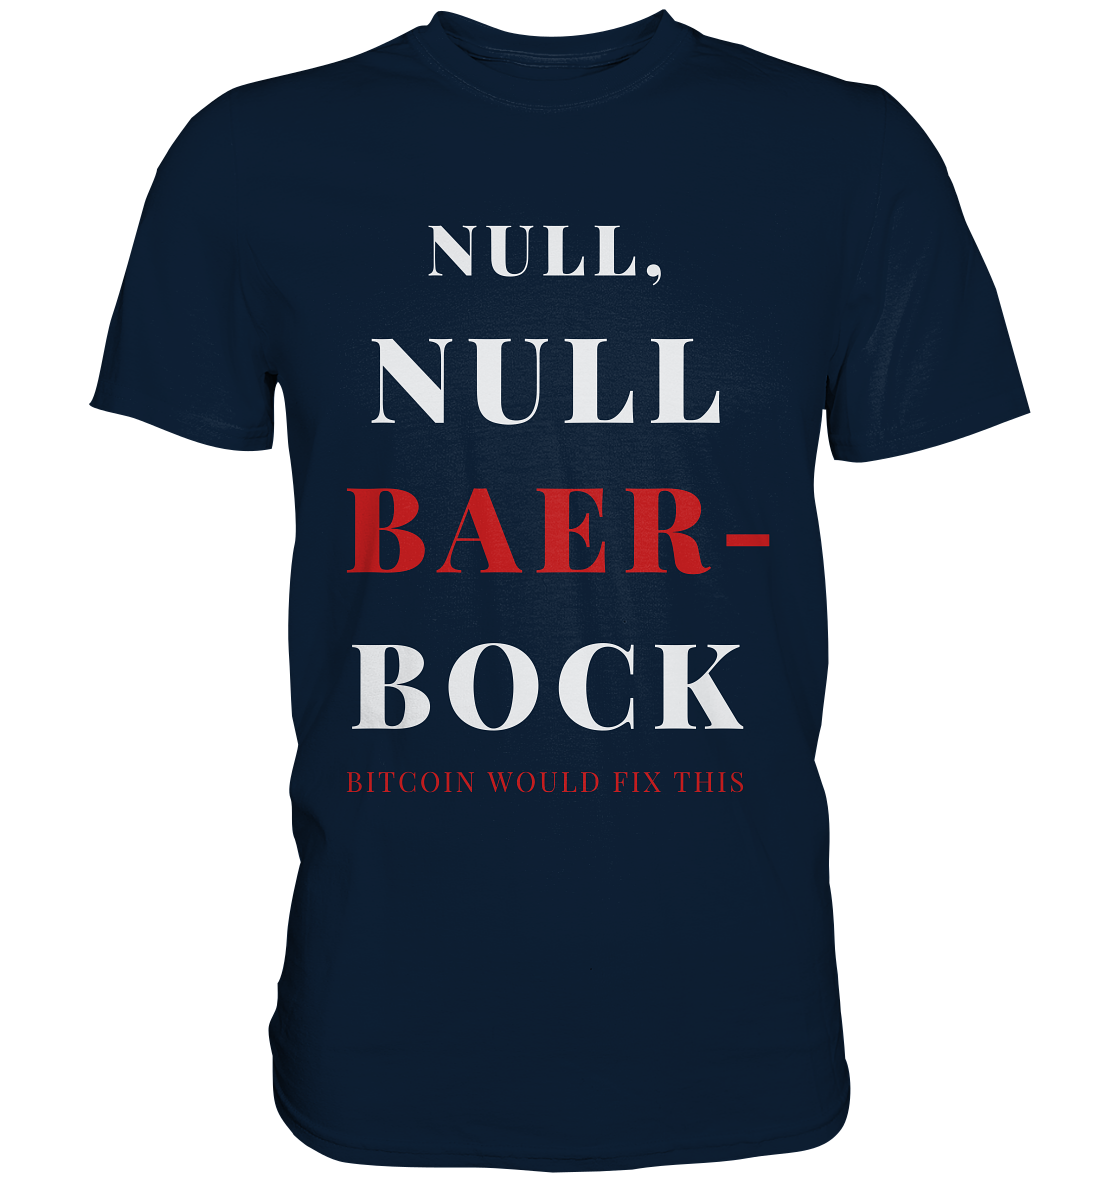 NULL, NULL BAER-BOCK - BITCOIN WOULD FIX... - STUDY BITCOIN   - Premium Shirt